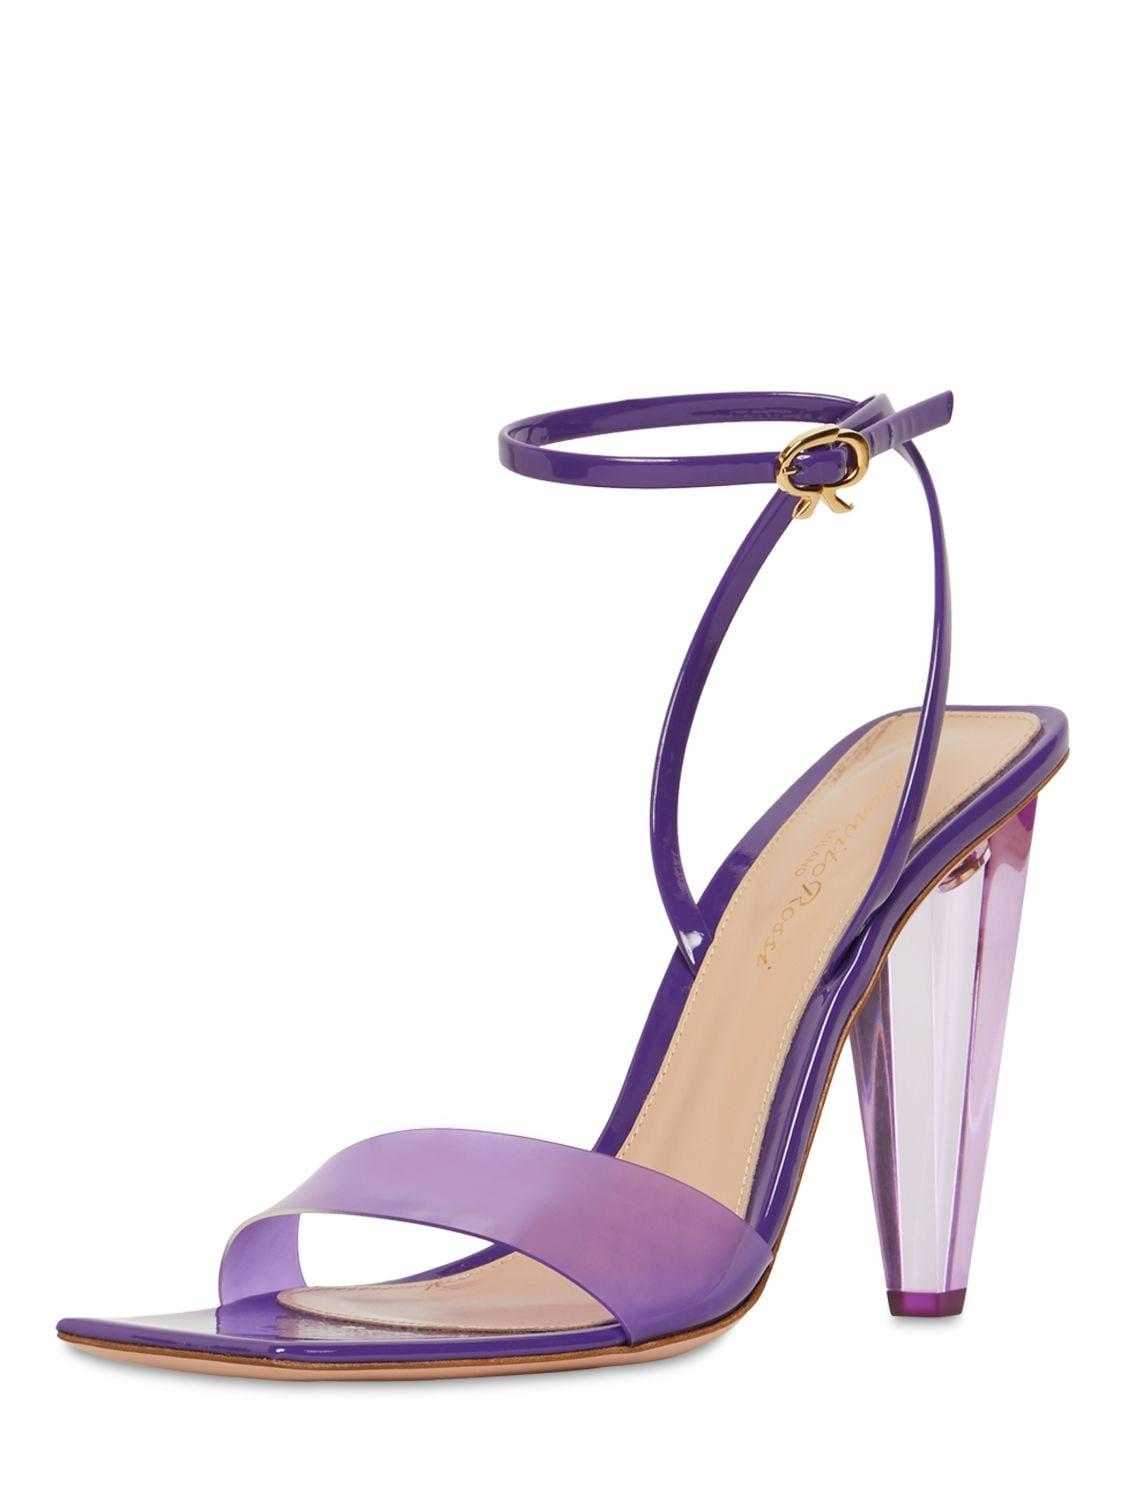 Gianvito Rossi 105mm Odyssey Plexi & Patent Sandals in Purple | Lyst